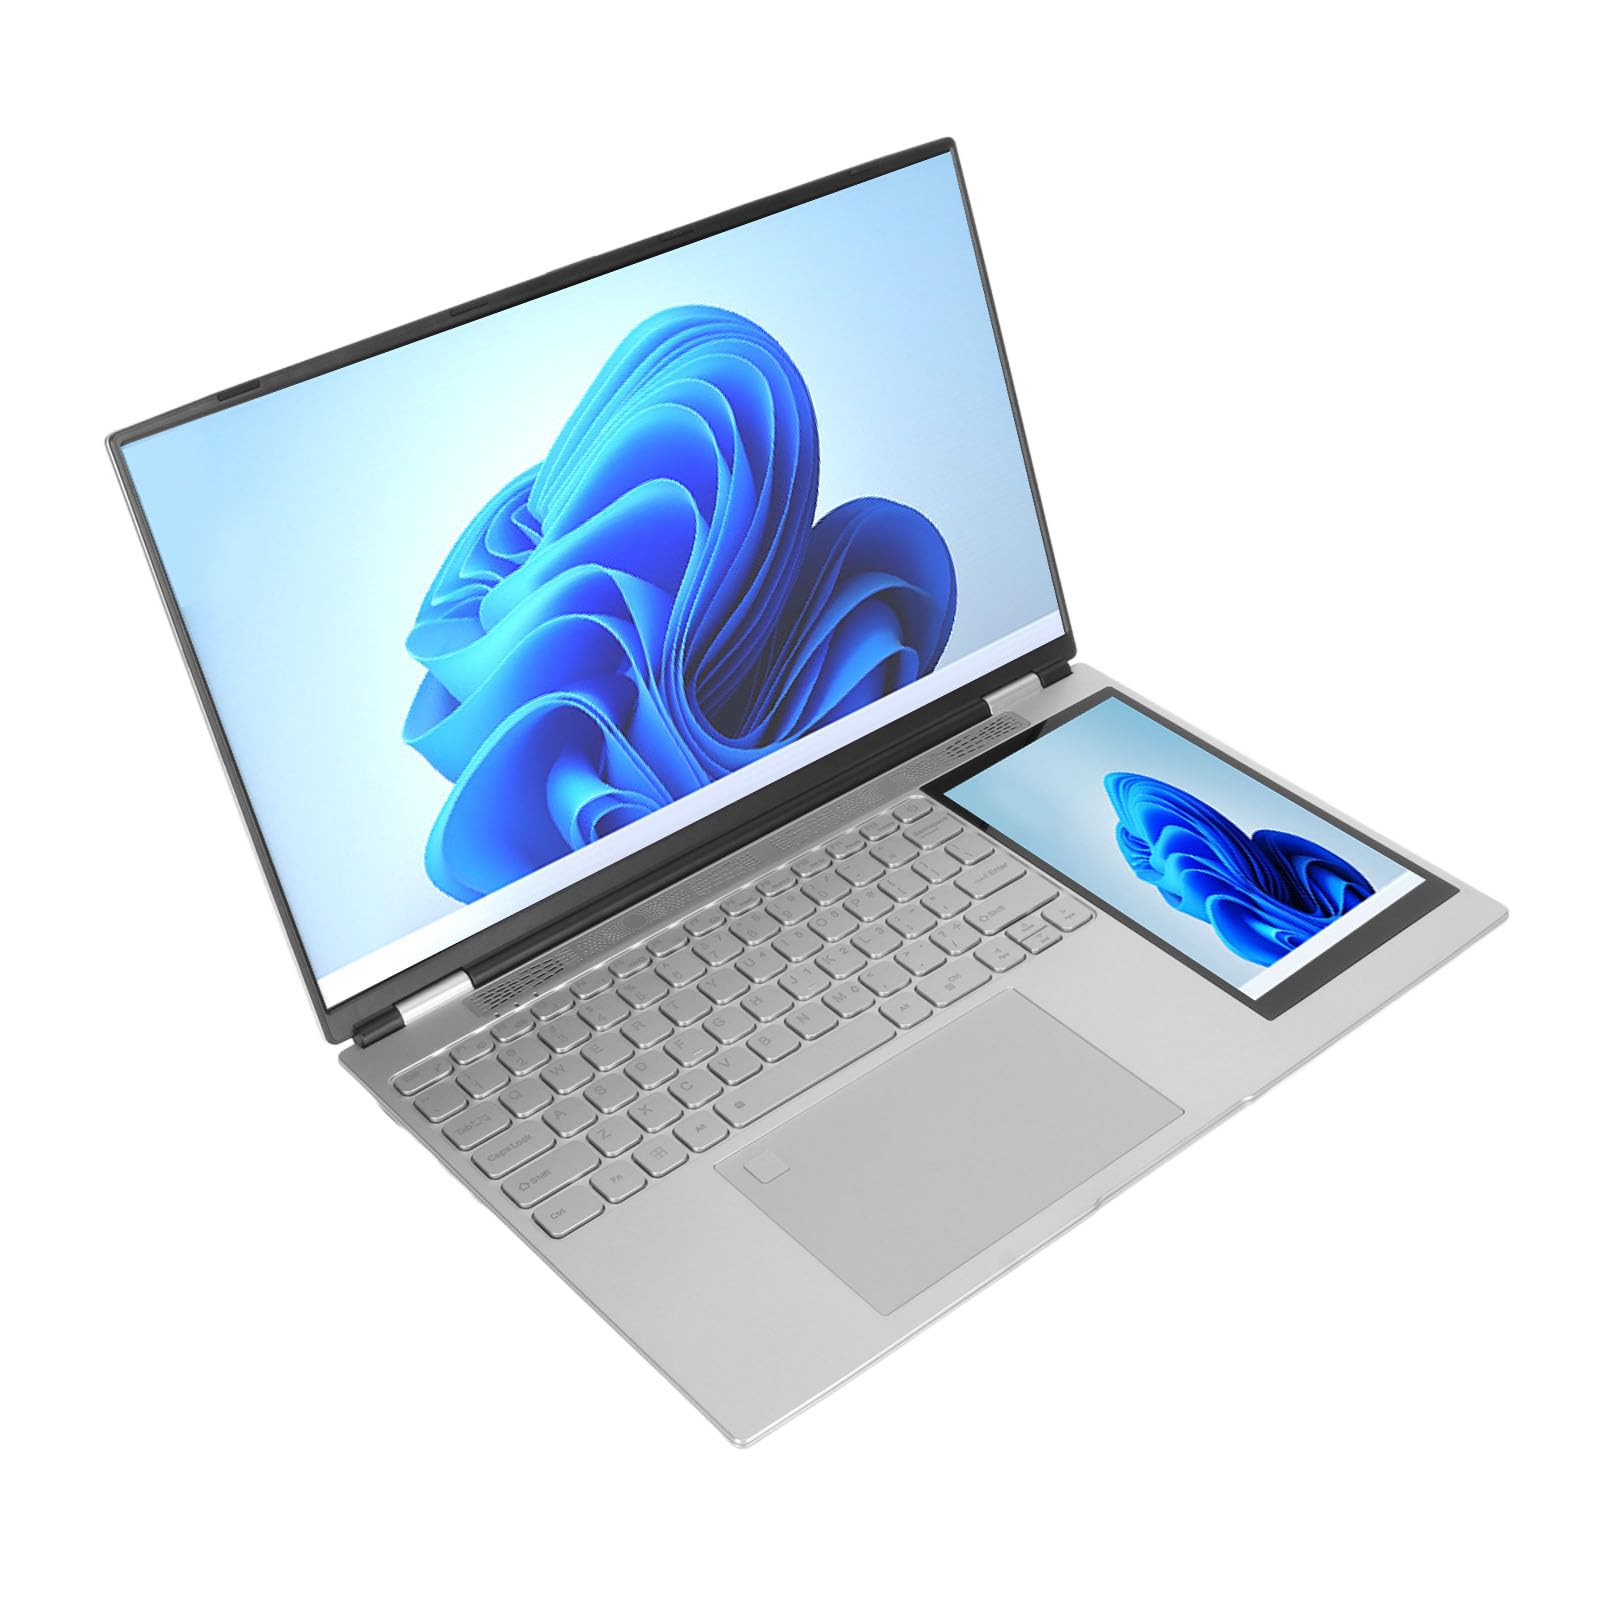 Zyyini Double Screen Laptop 1920x1080 15.6 Inch IPS 1280x800 7 Inch IPS Touch Screen 16GB Fingerprint Unlock Laptop Support 2.4G 5G Dual Band WiFi (16GB+1TB US Plug)